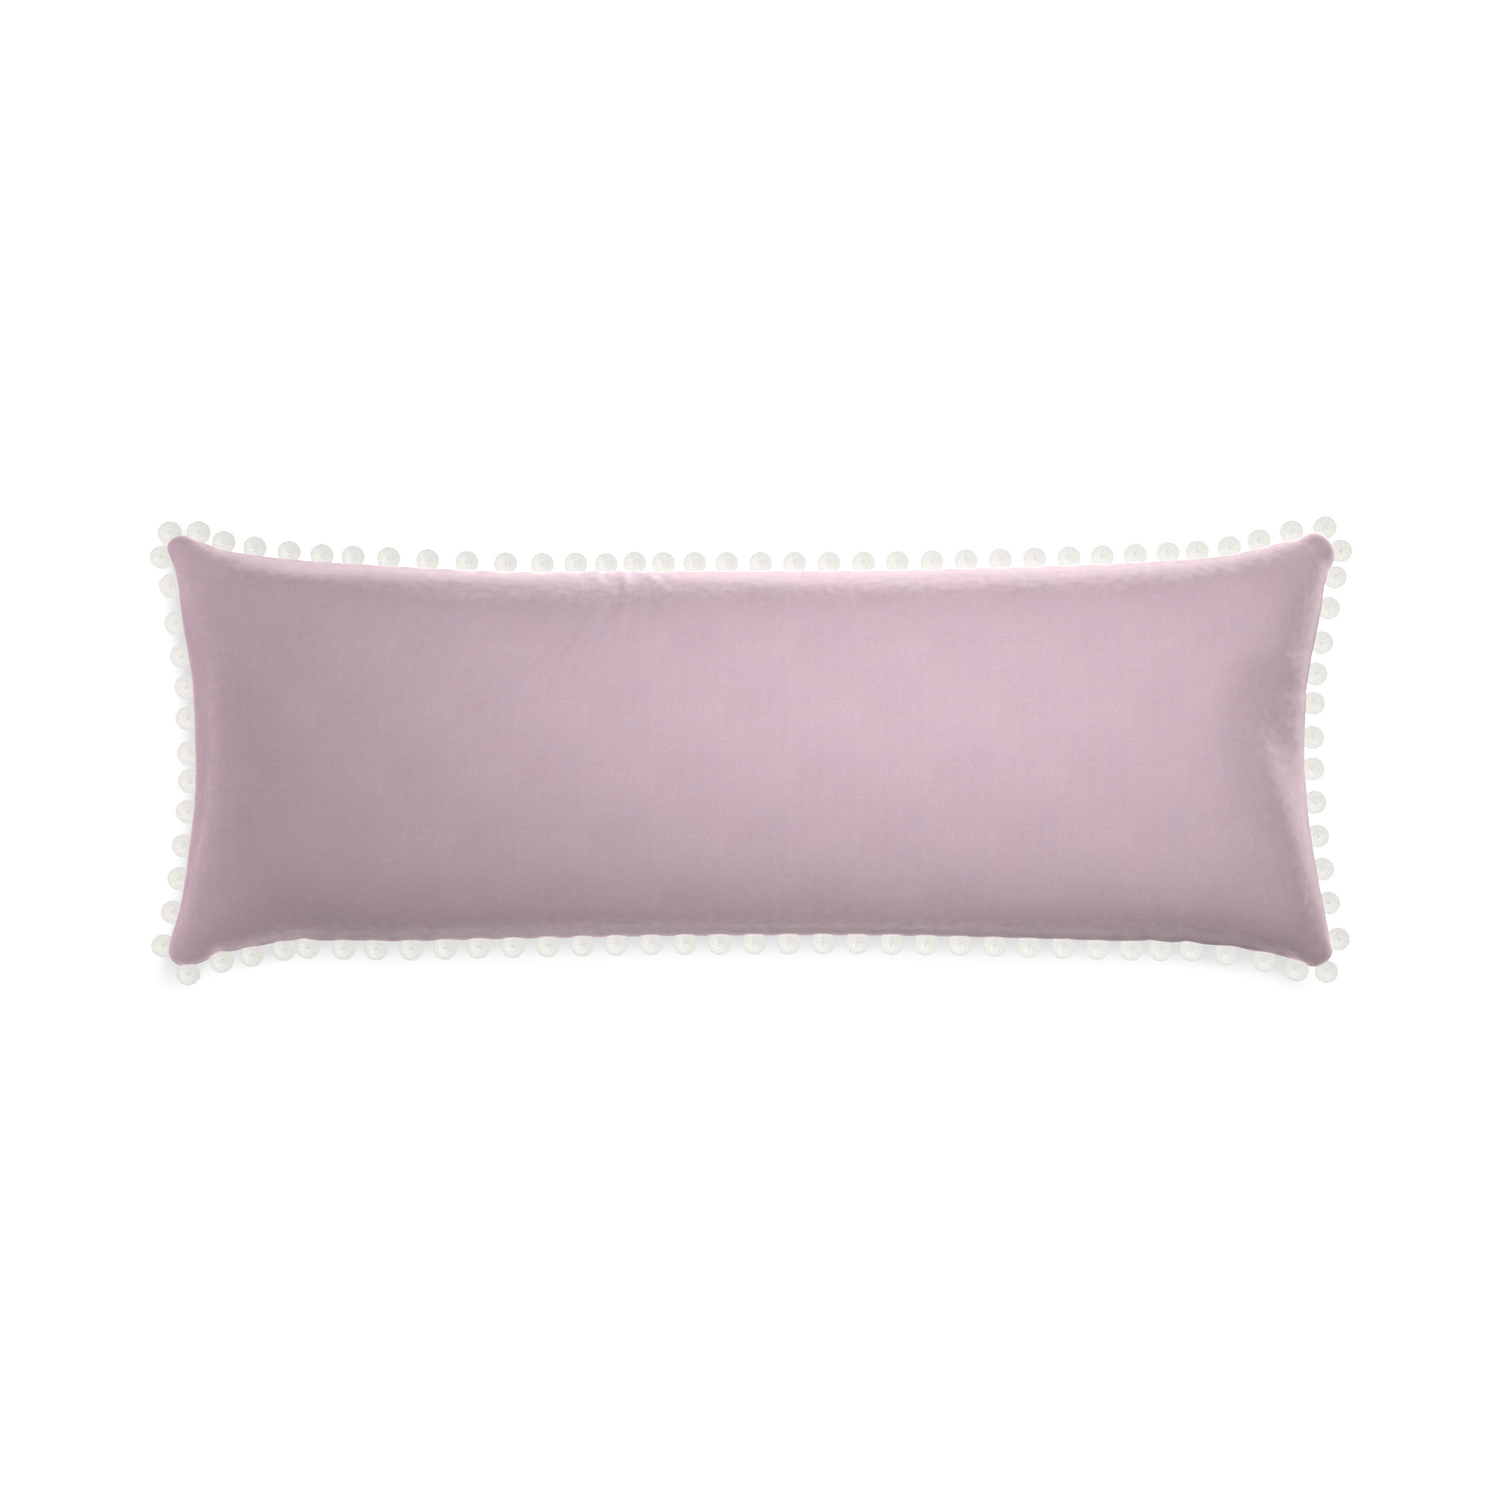 Xl-lumbar lilac velvet custom pillow with snow pom pom on white background